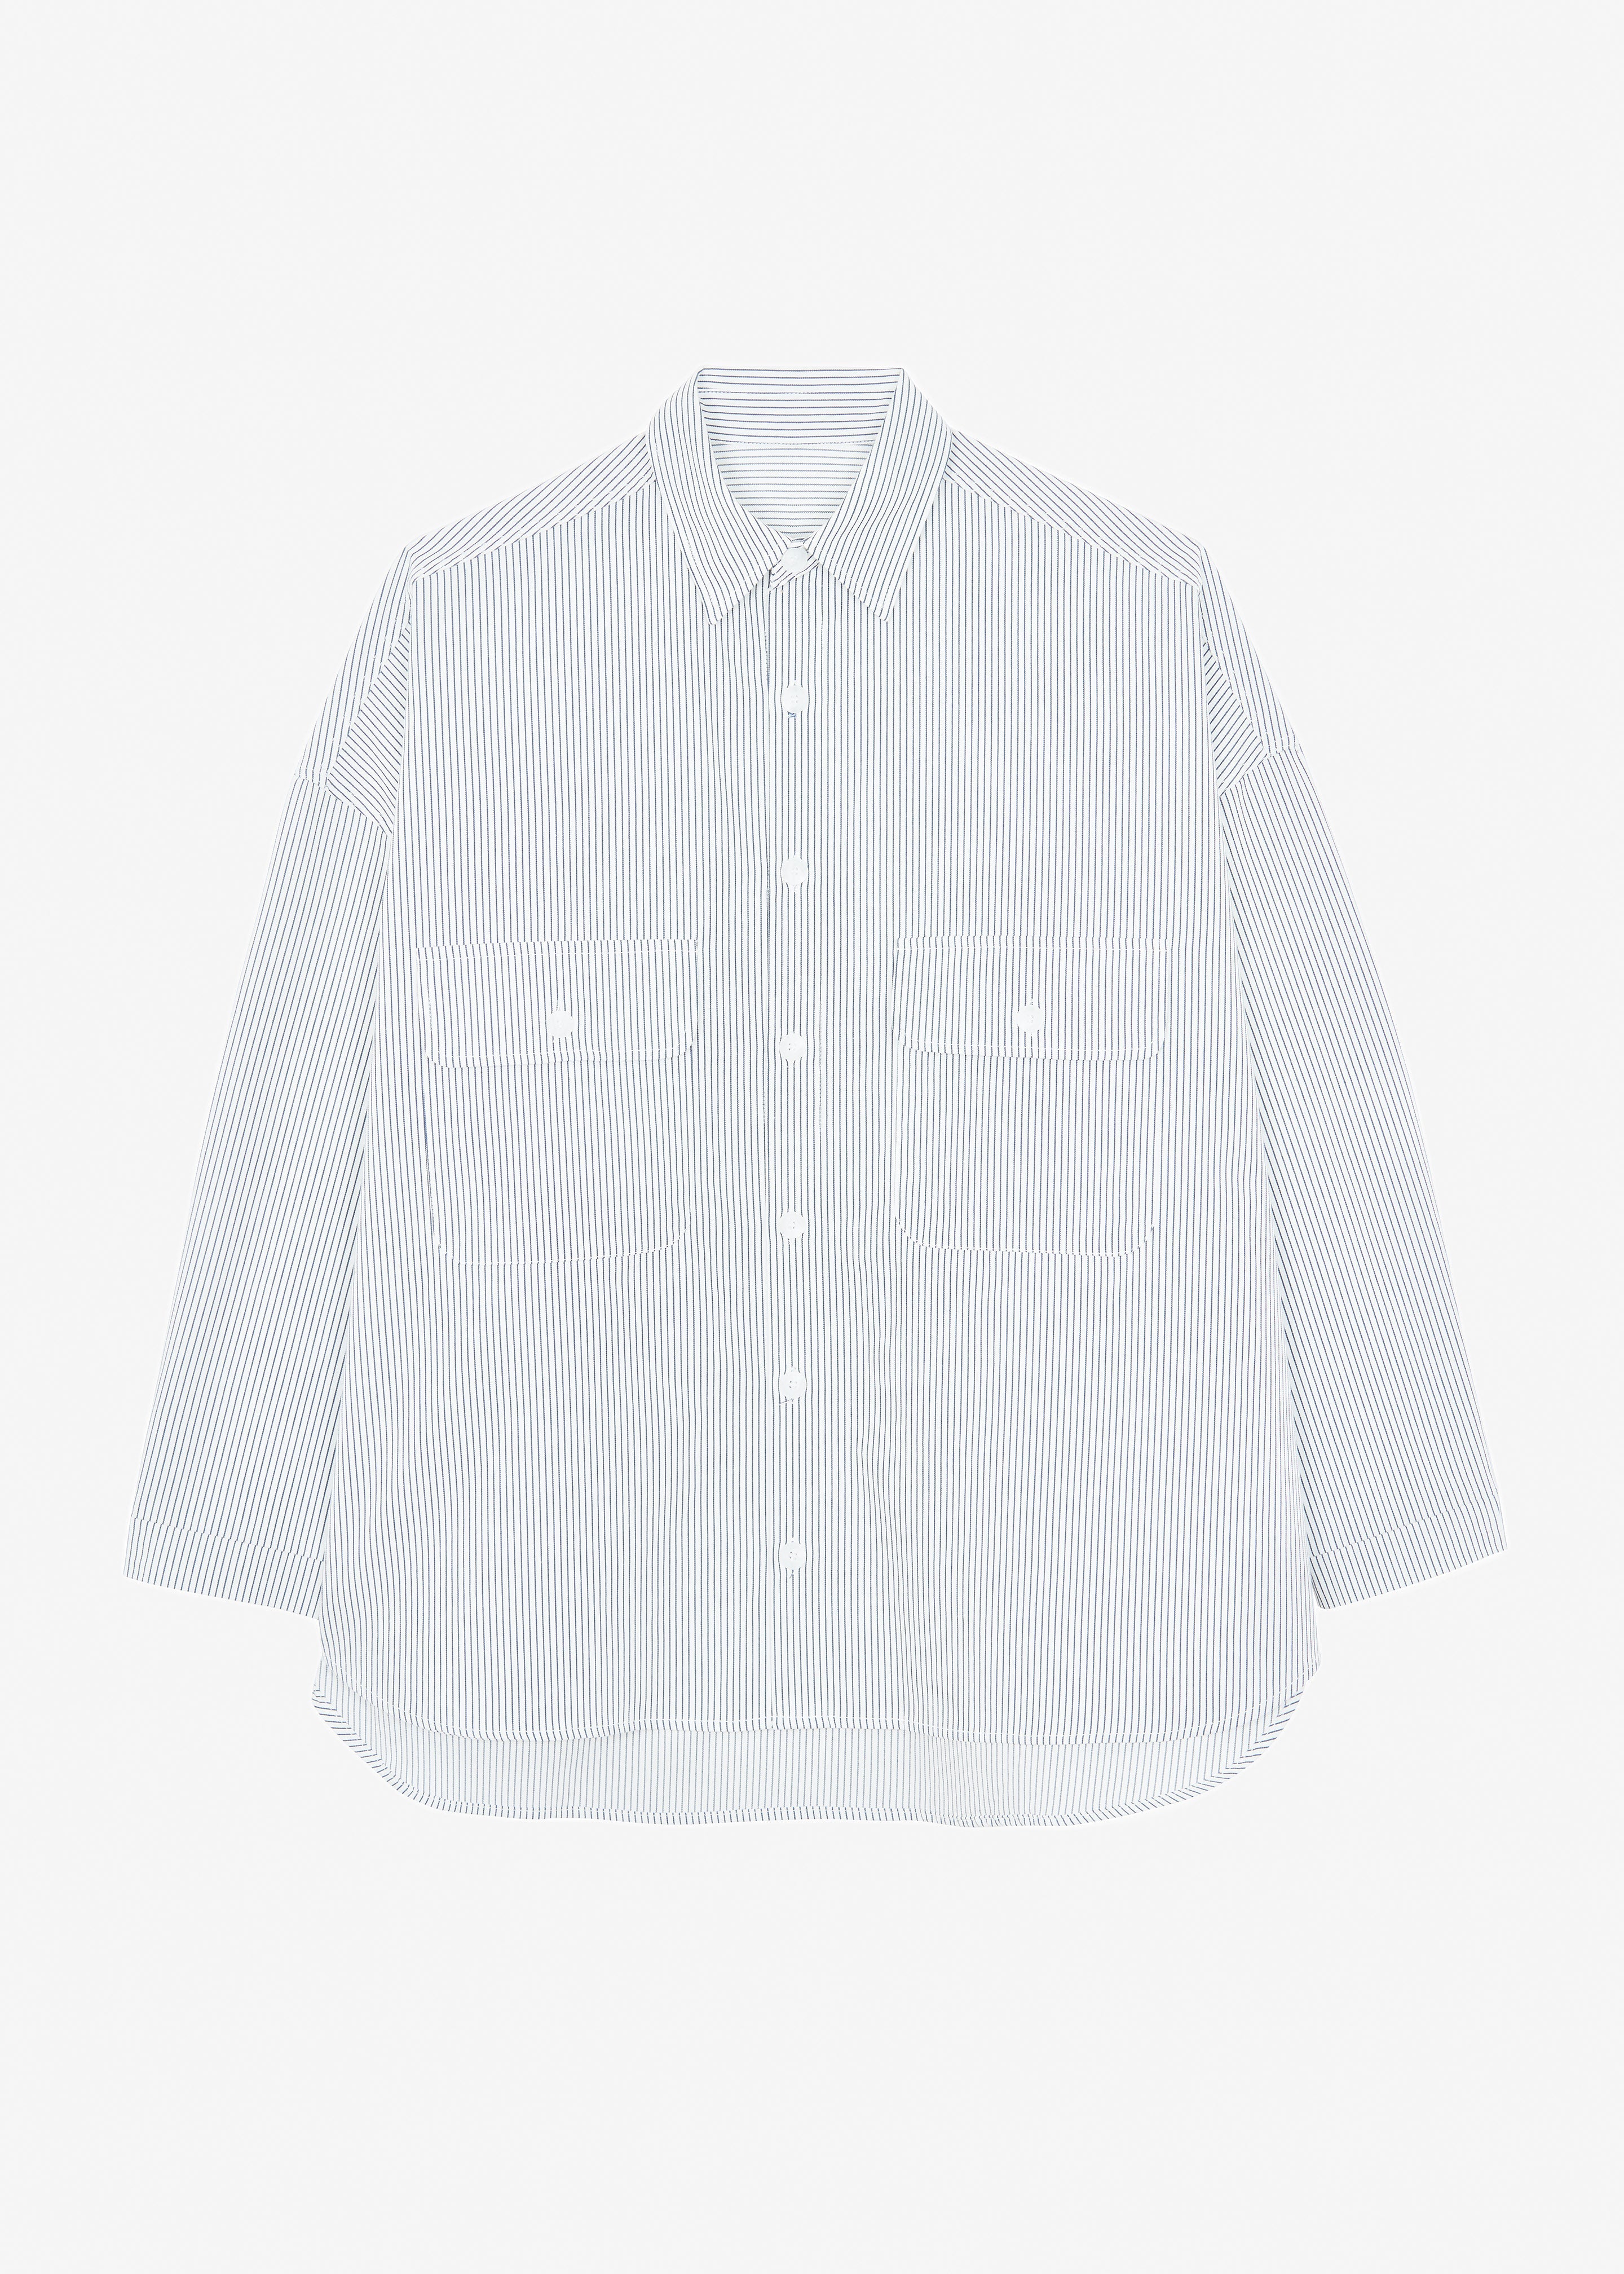 Kaline White Pocket Shirt - Navy Stripe - 13